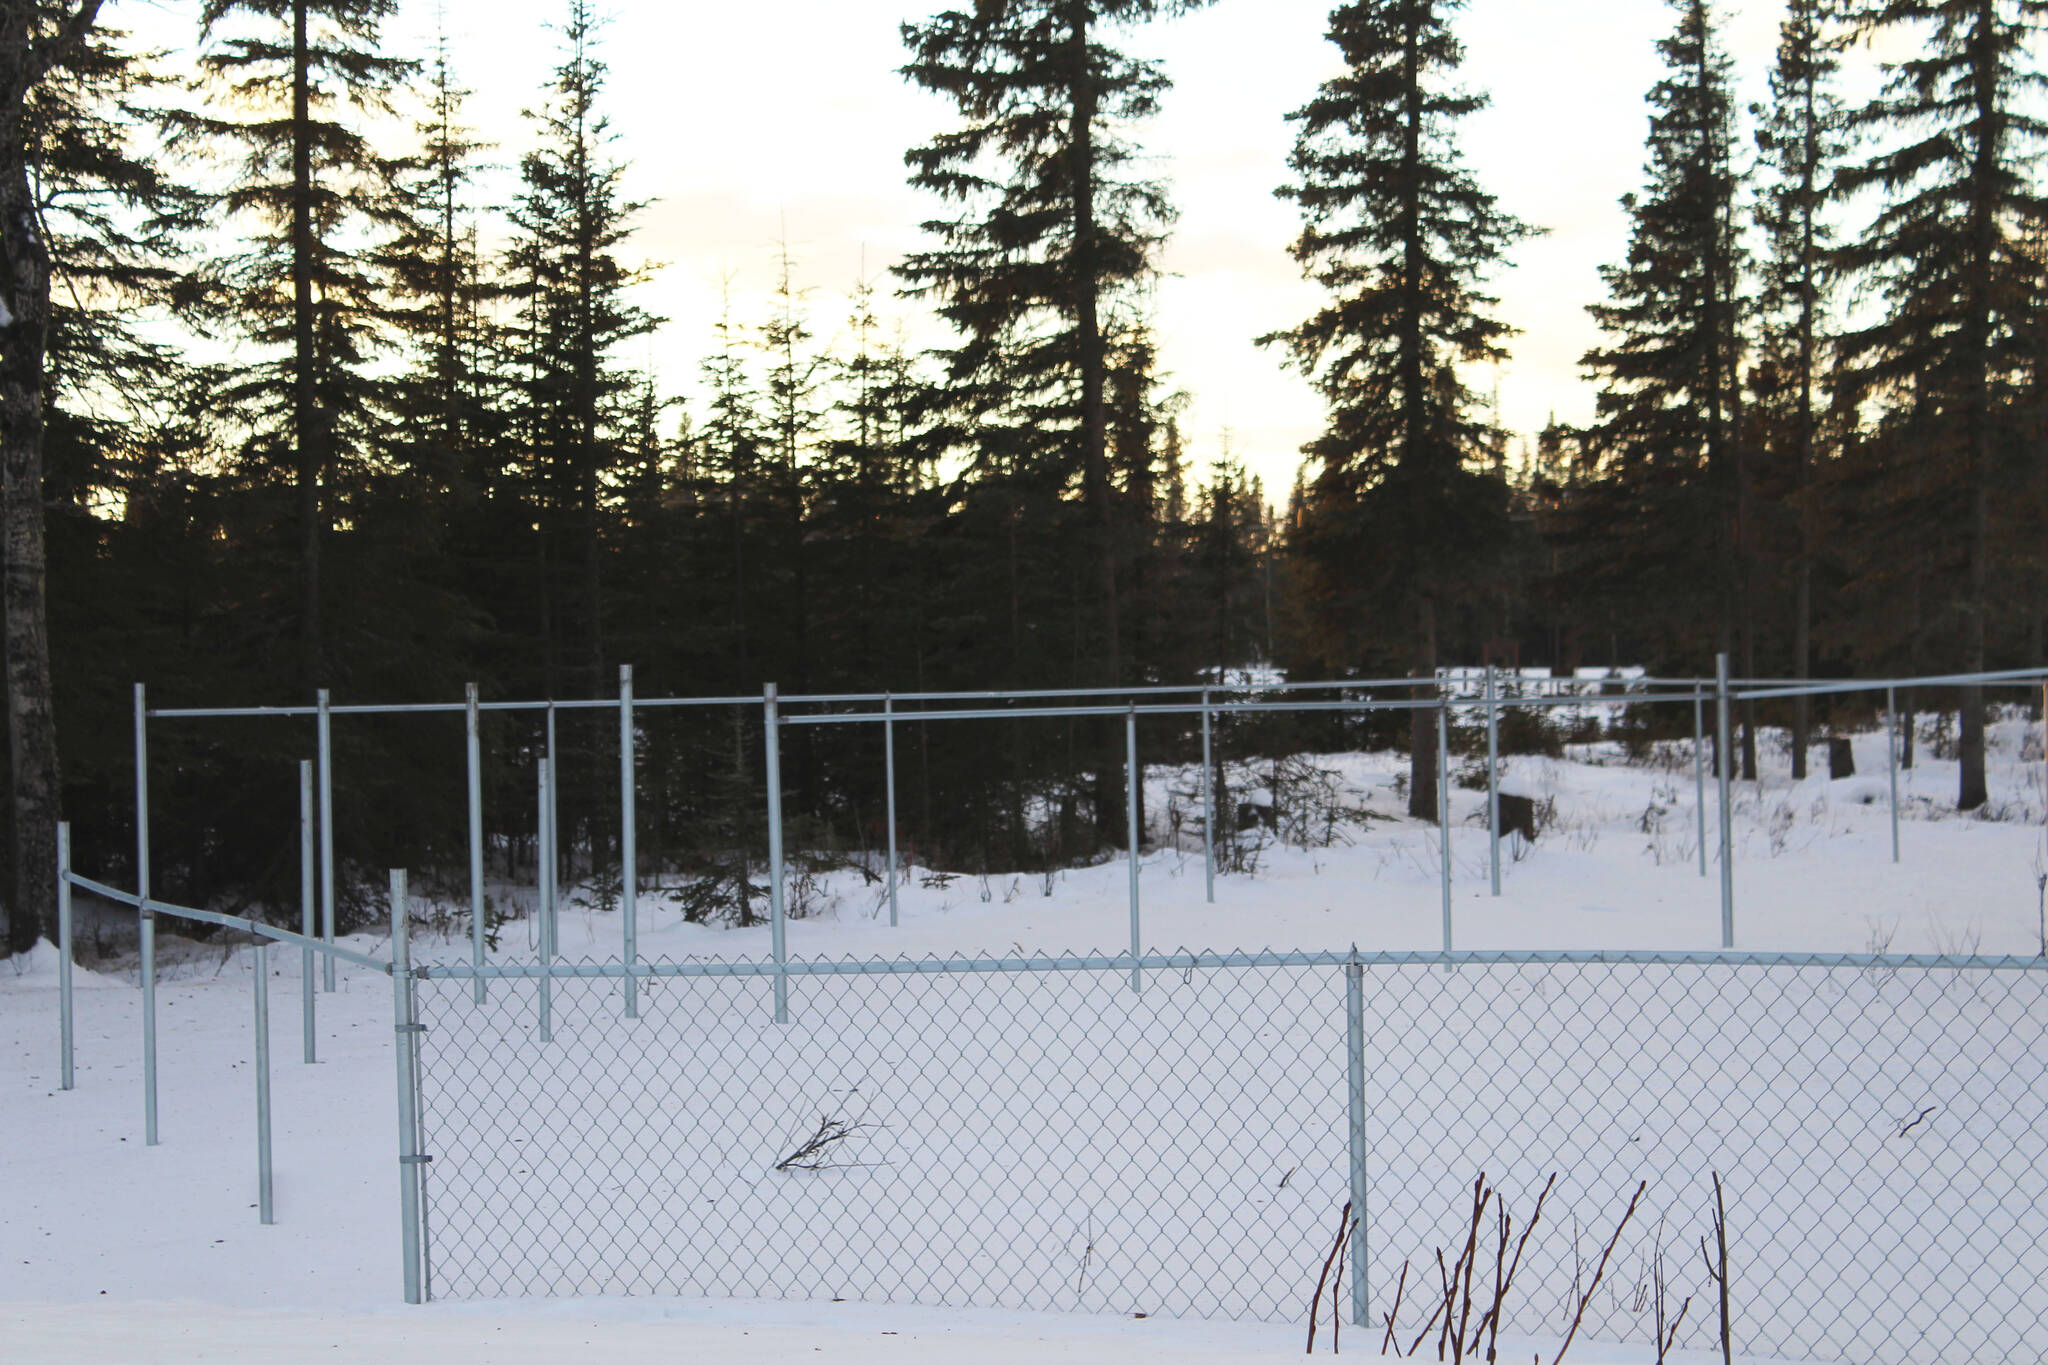 Fencing marks the boundaries of a planned dog park in Kenai near Daubenspeck Park on Monday, Dec. 27, 2021 in Kenai, Alaska. (Ashlyn O’Hara/Peninsula Clarion)